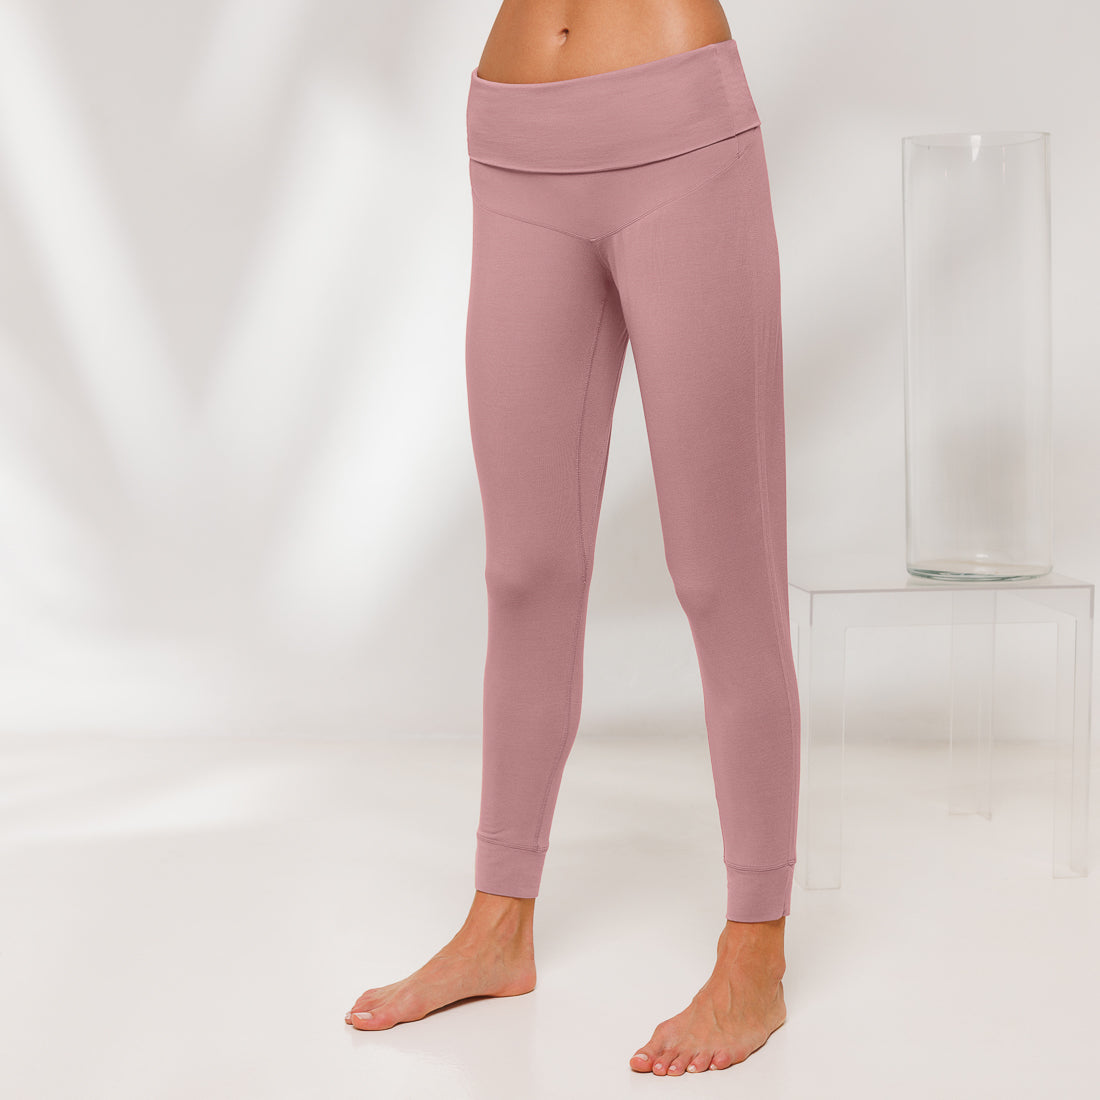 Breathable yoga sleep pants for women